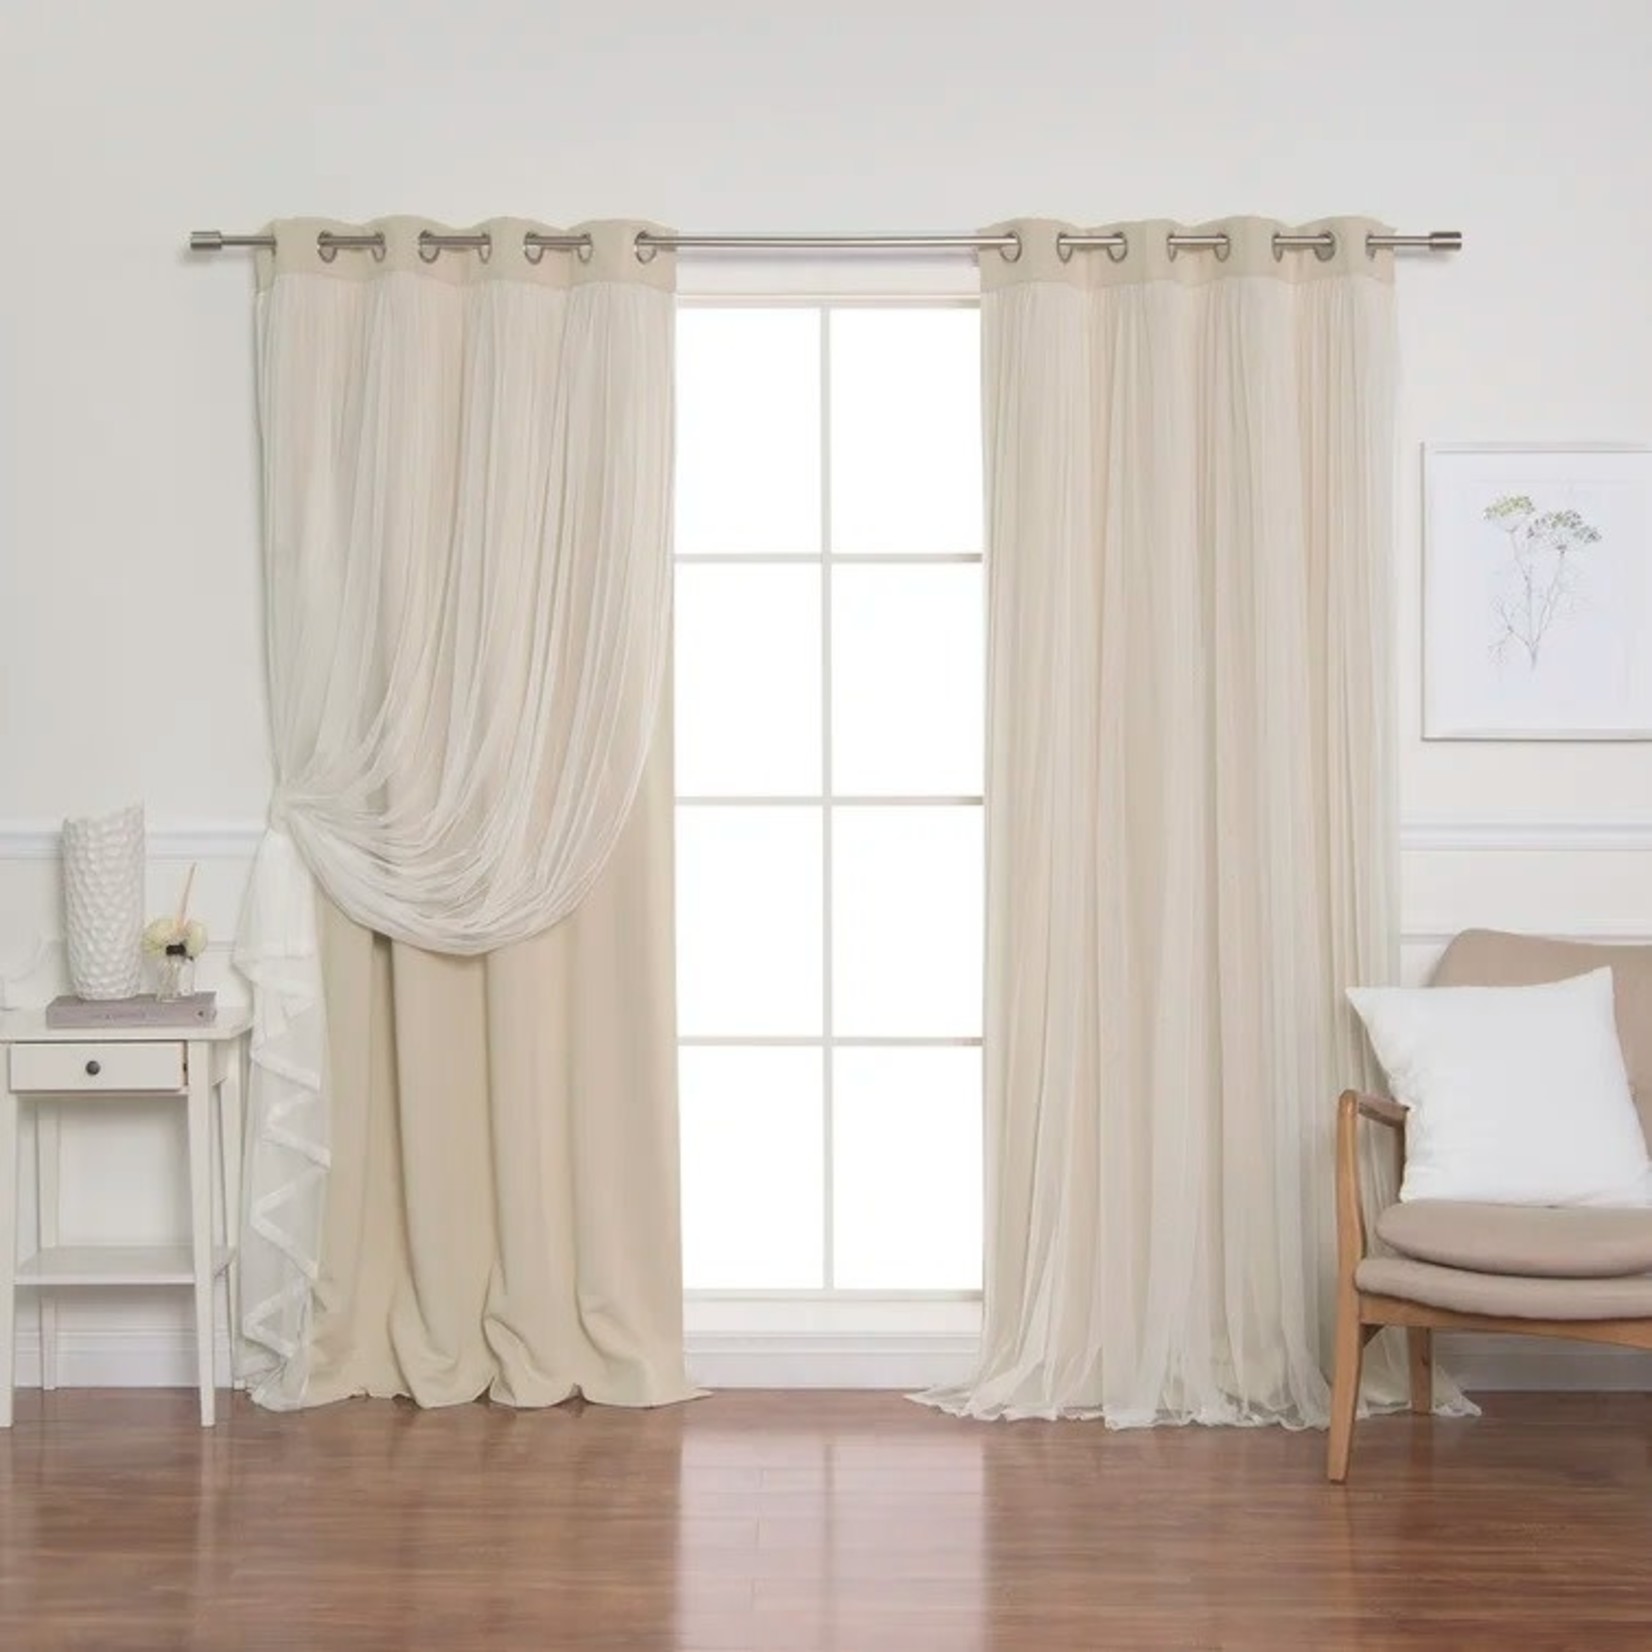 *52" x 96" Brockham Solid Tulle Overlay Room Darkening Grommet Curtain Panels - Set of 2 - Beige